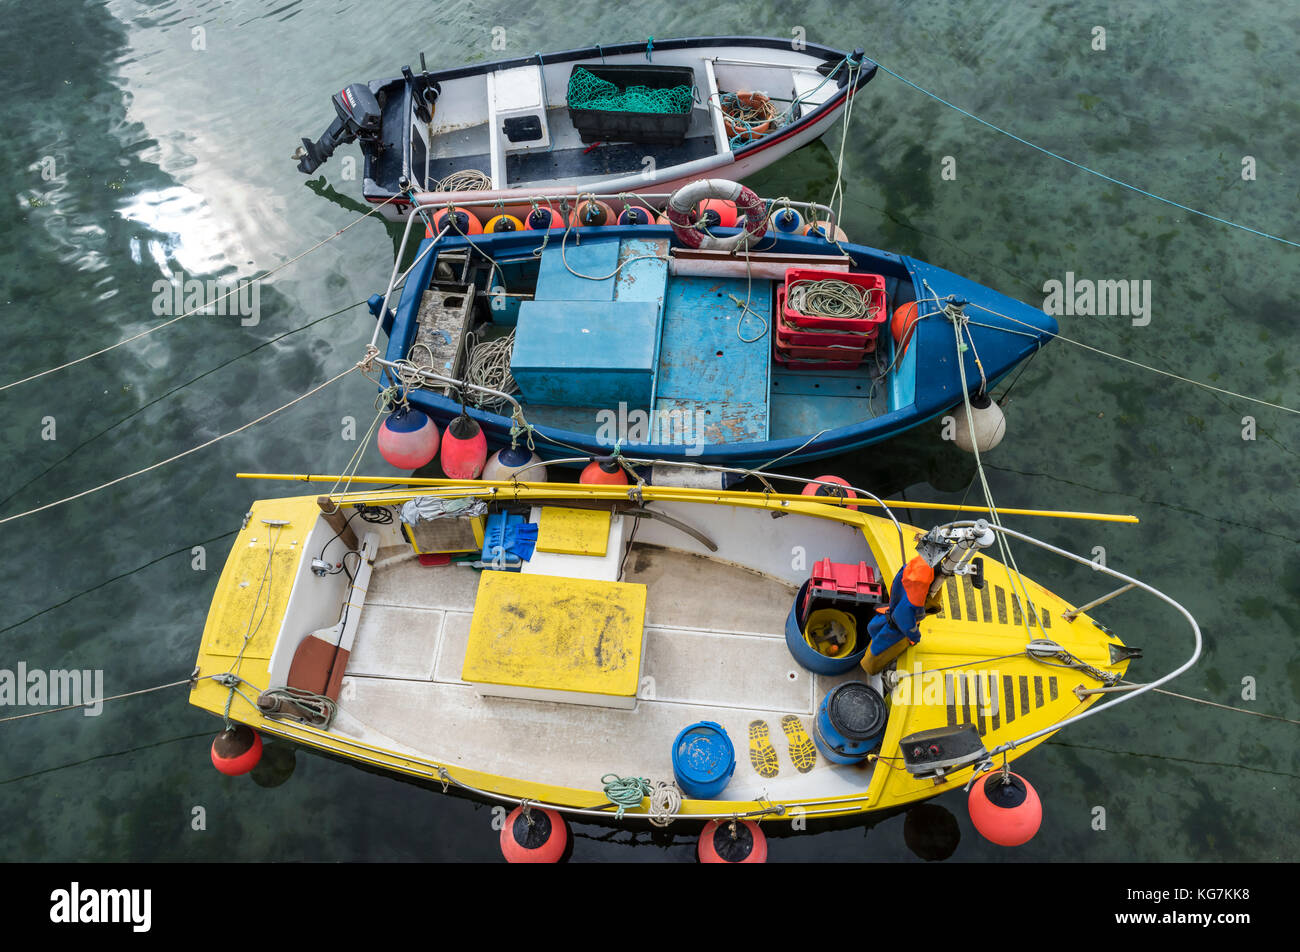 https://c8.alamy.com/comp/KG7KK8/mousehole-england-april-28-2017-three-fishing-boats-with-nets-boxes-KG7KK8.jpg